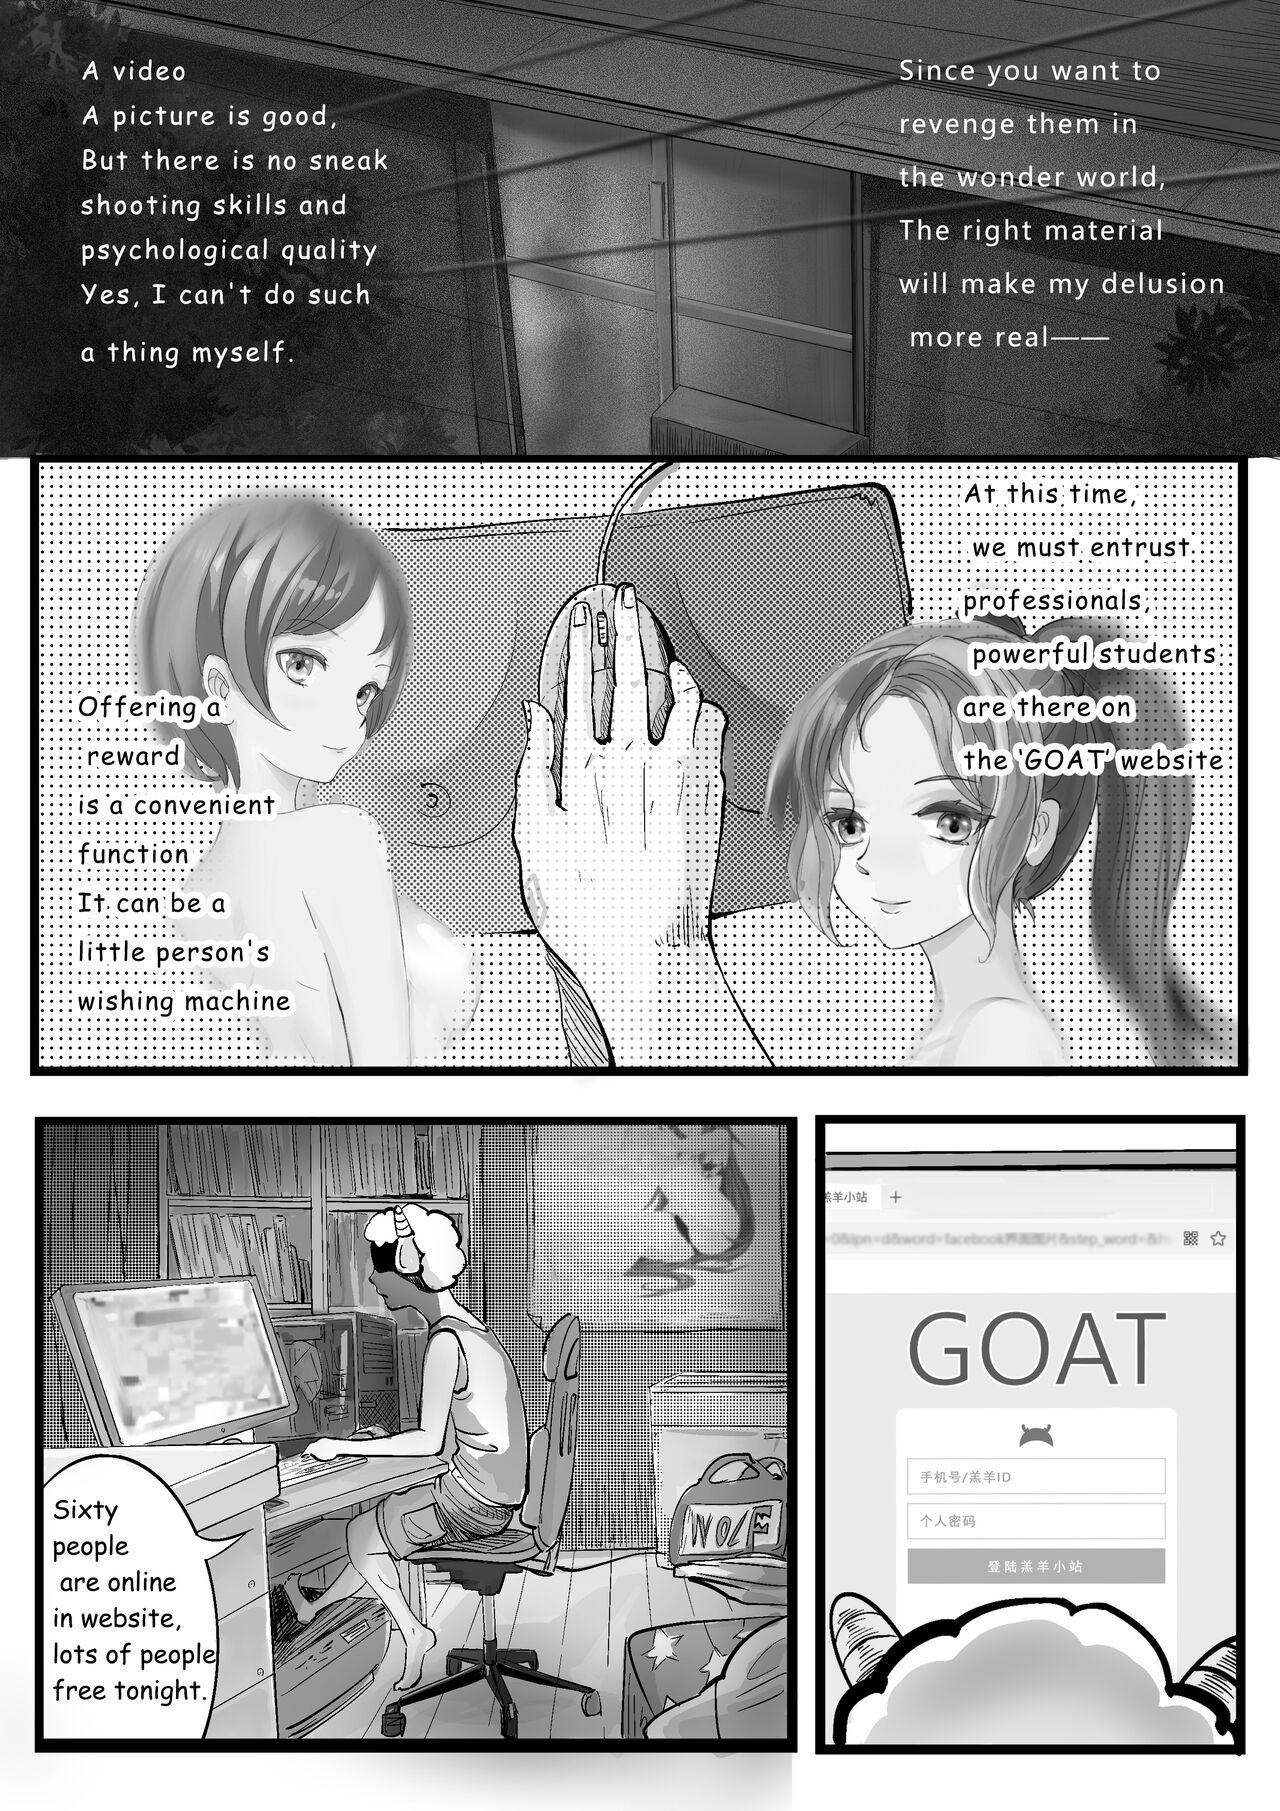 GOAT-goat chapter 2 3